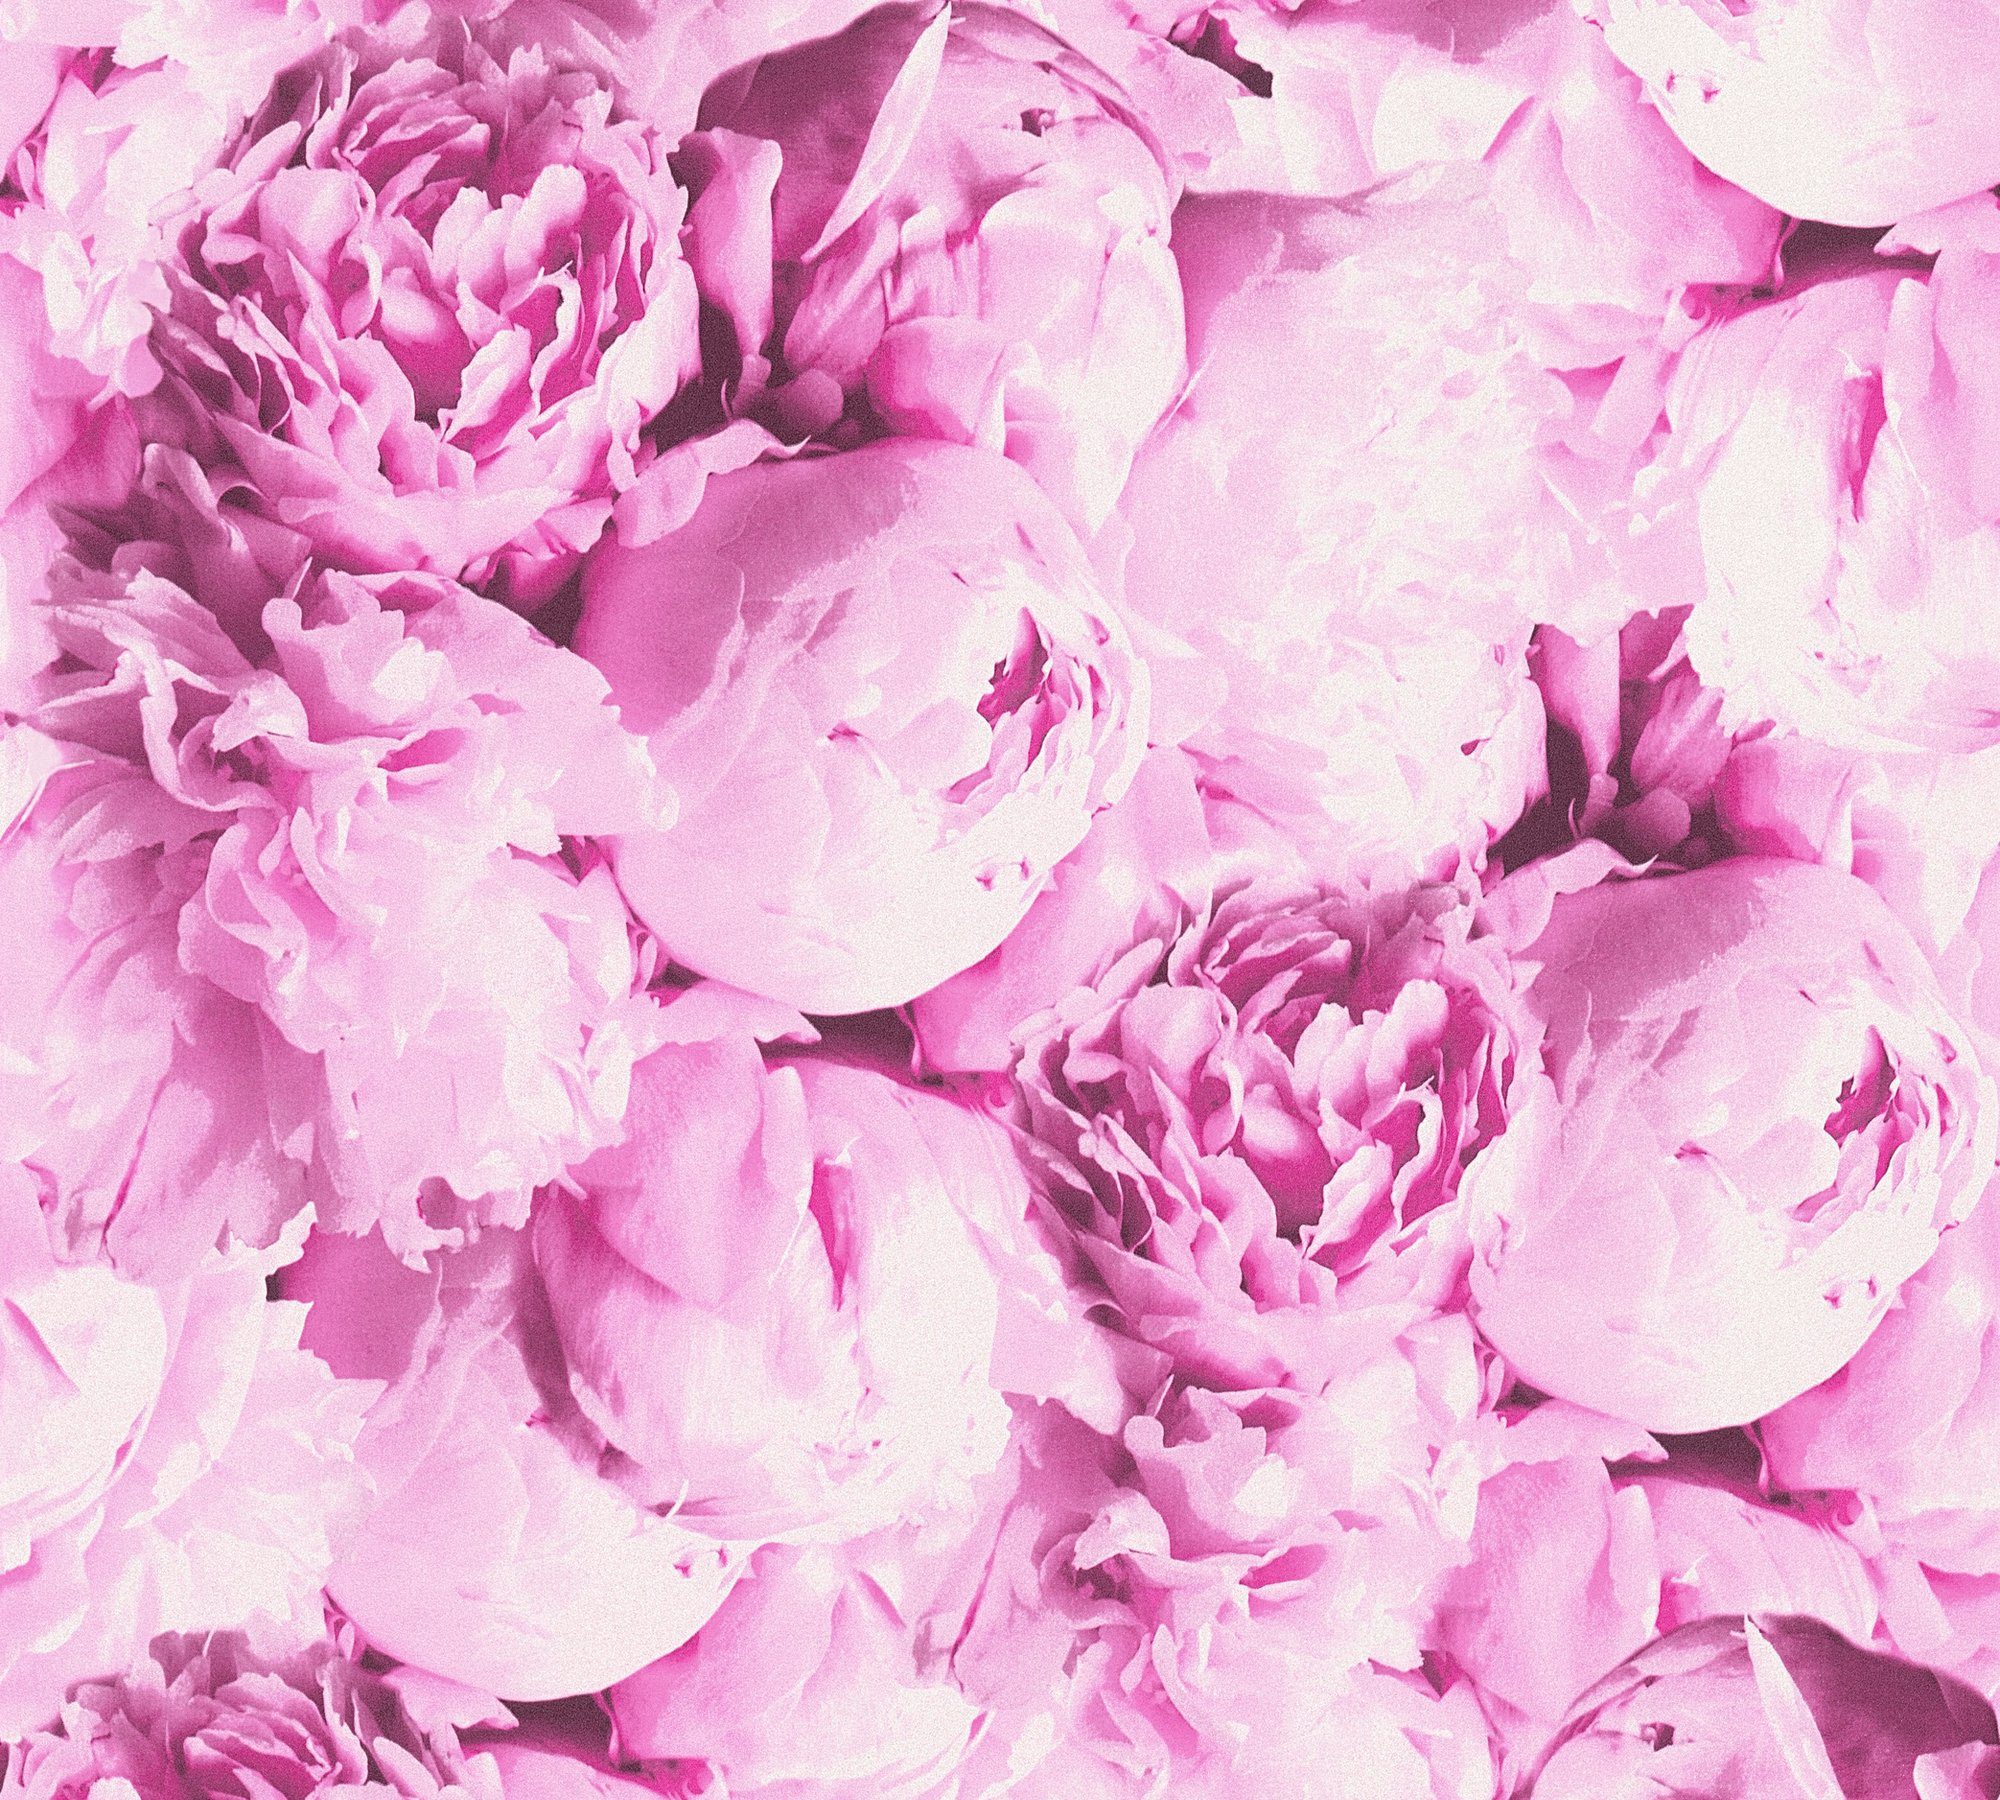 Flowery 2.0 Blumen Rosen, mit Neue Romantic Bude rosa/pink Création romantischen Tapete Vliestapete floral, A.S. Floral